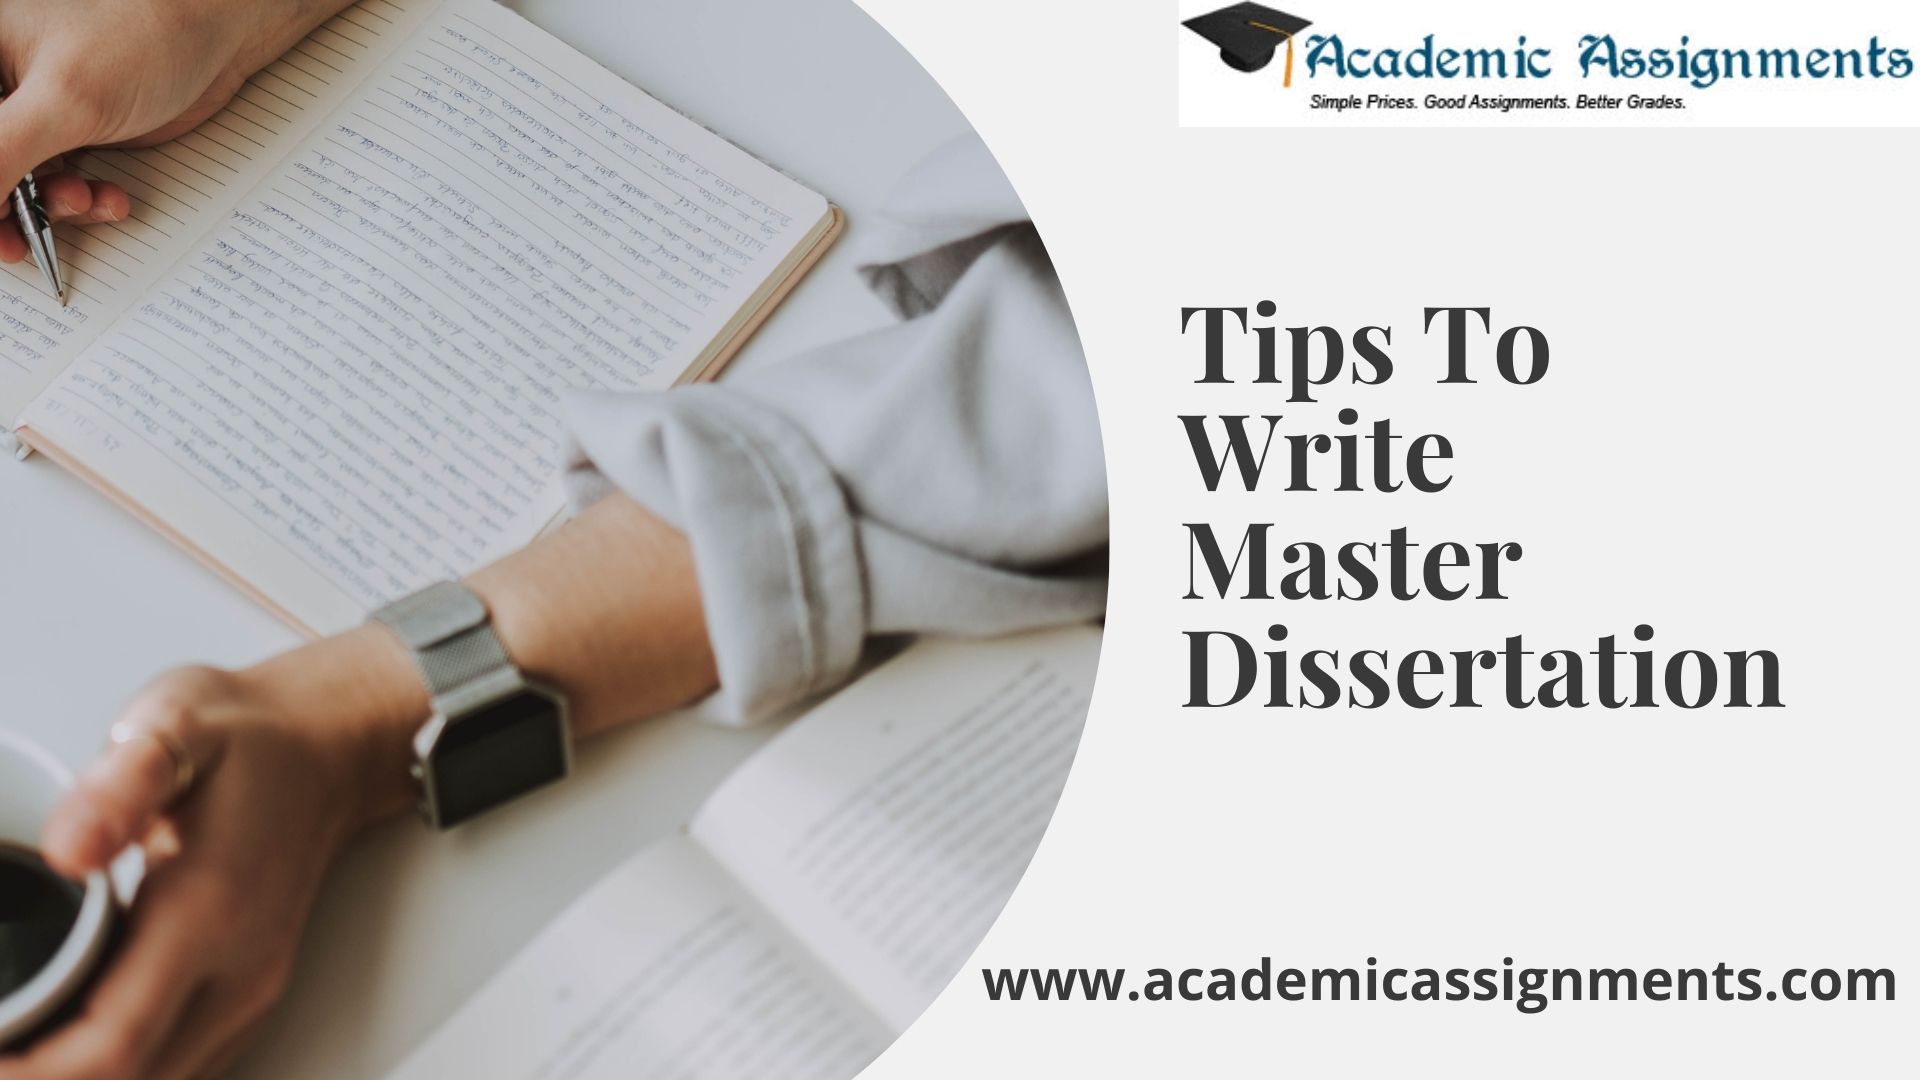 Tips To Write Master Dissertation